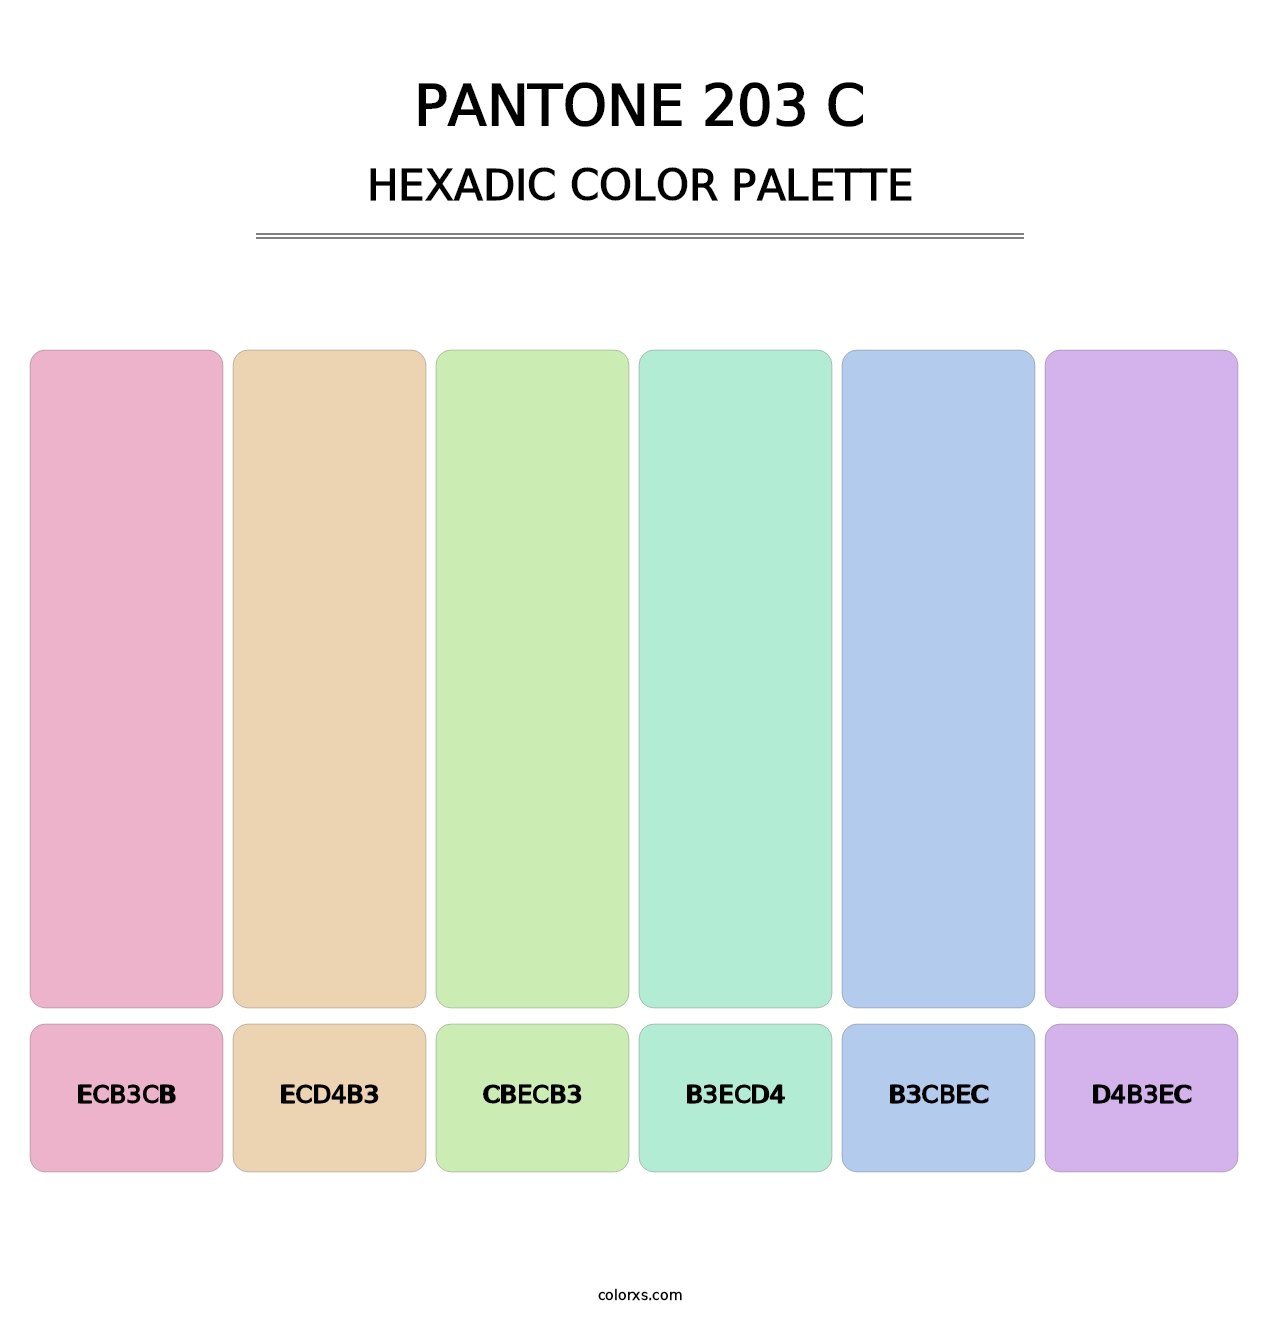 PANTONE 203 C - Hexadic Color Palette